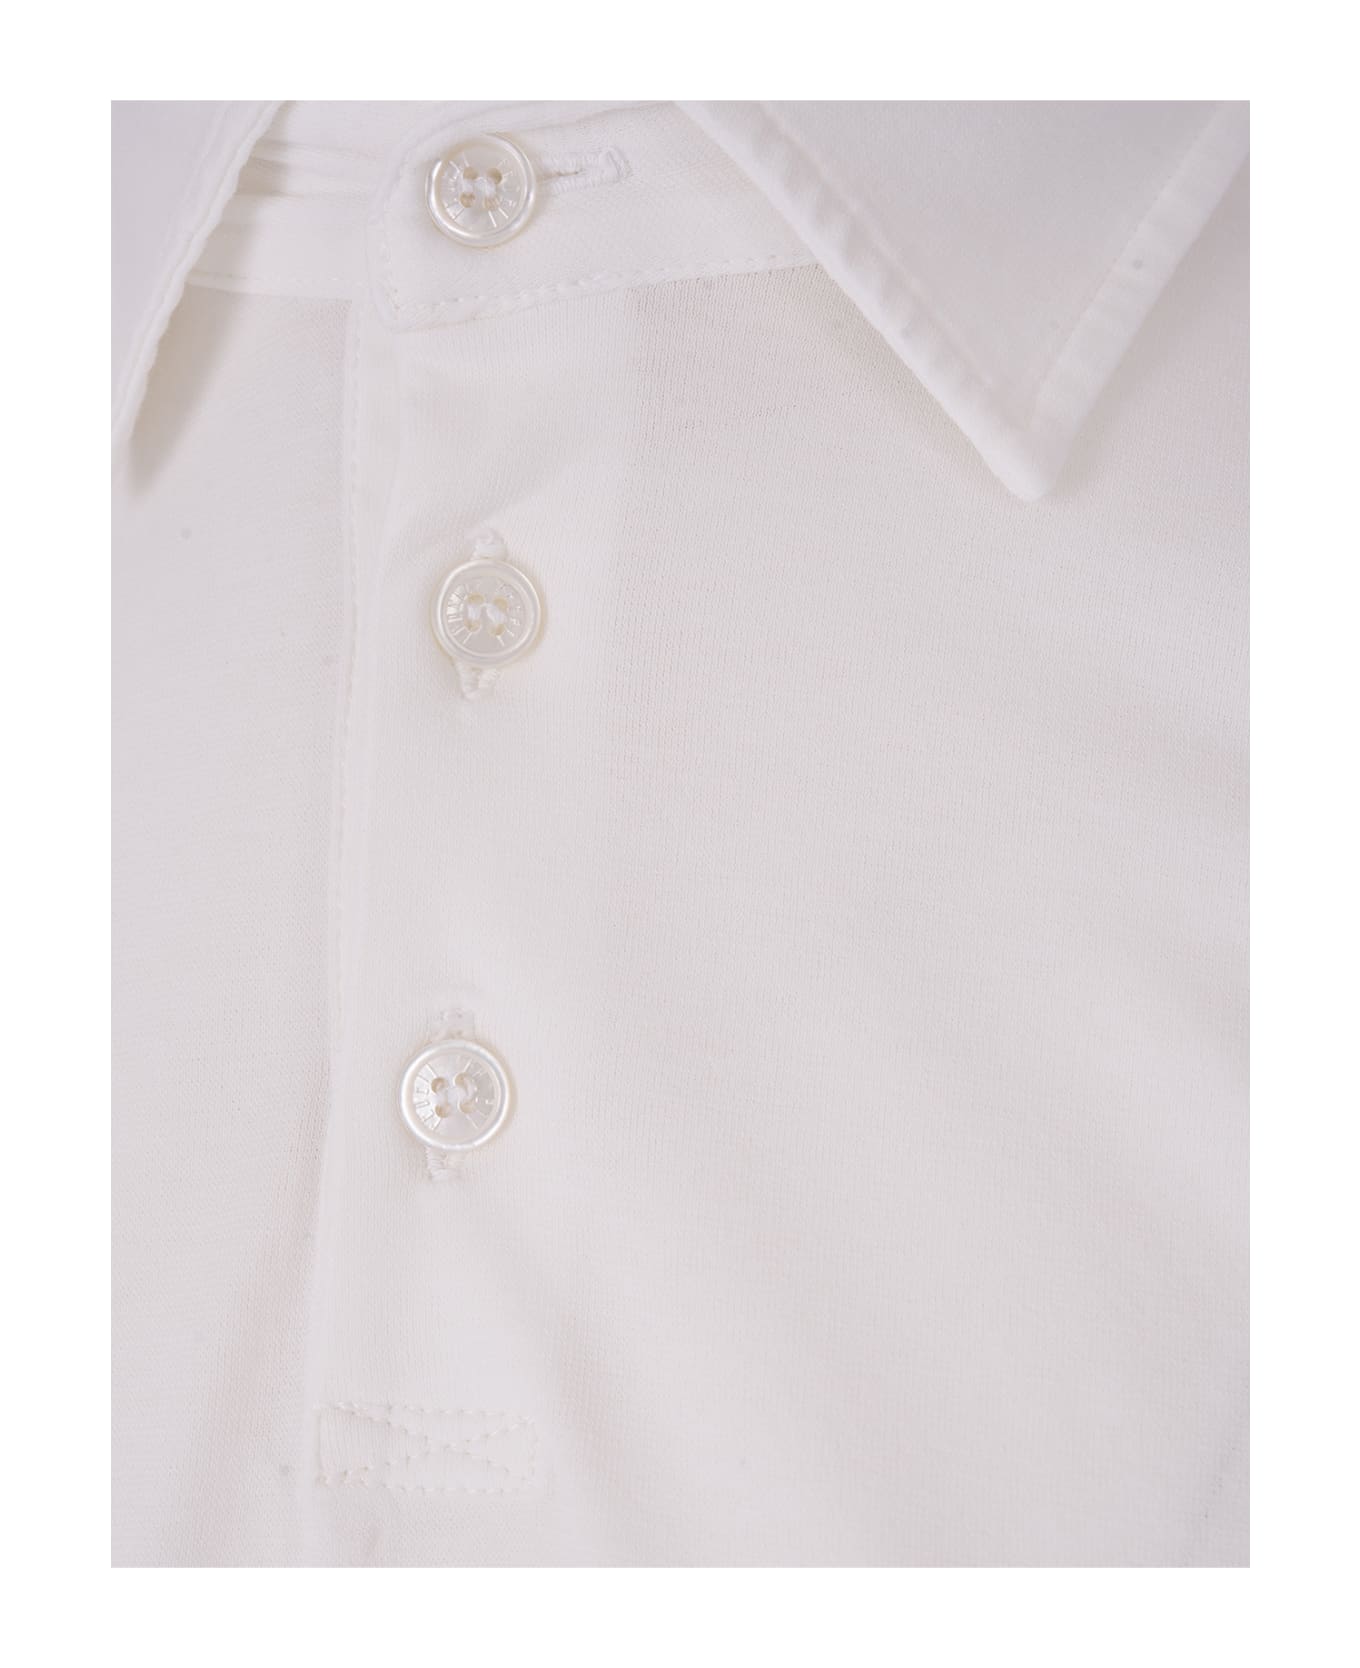 Fedeli Short-sleeved belts Polo Shirt In White Cotton - White